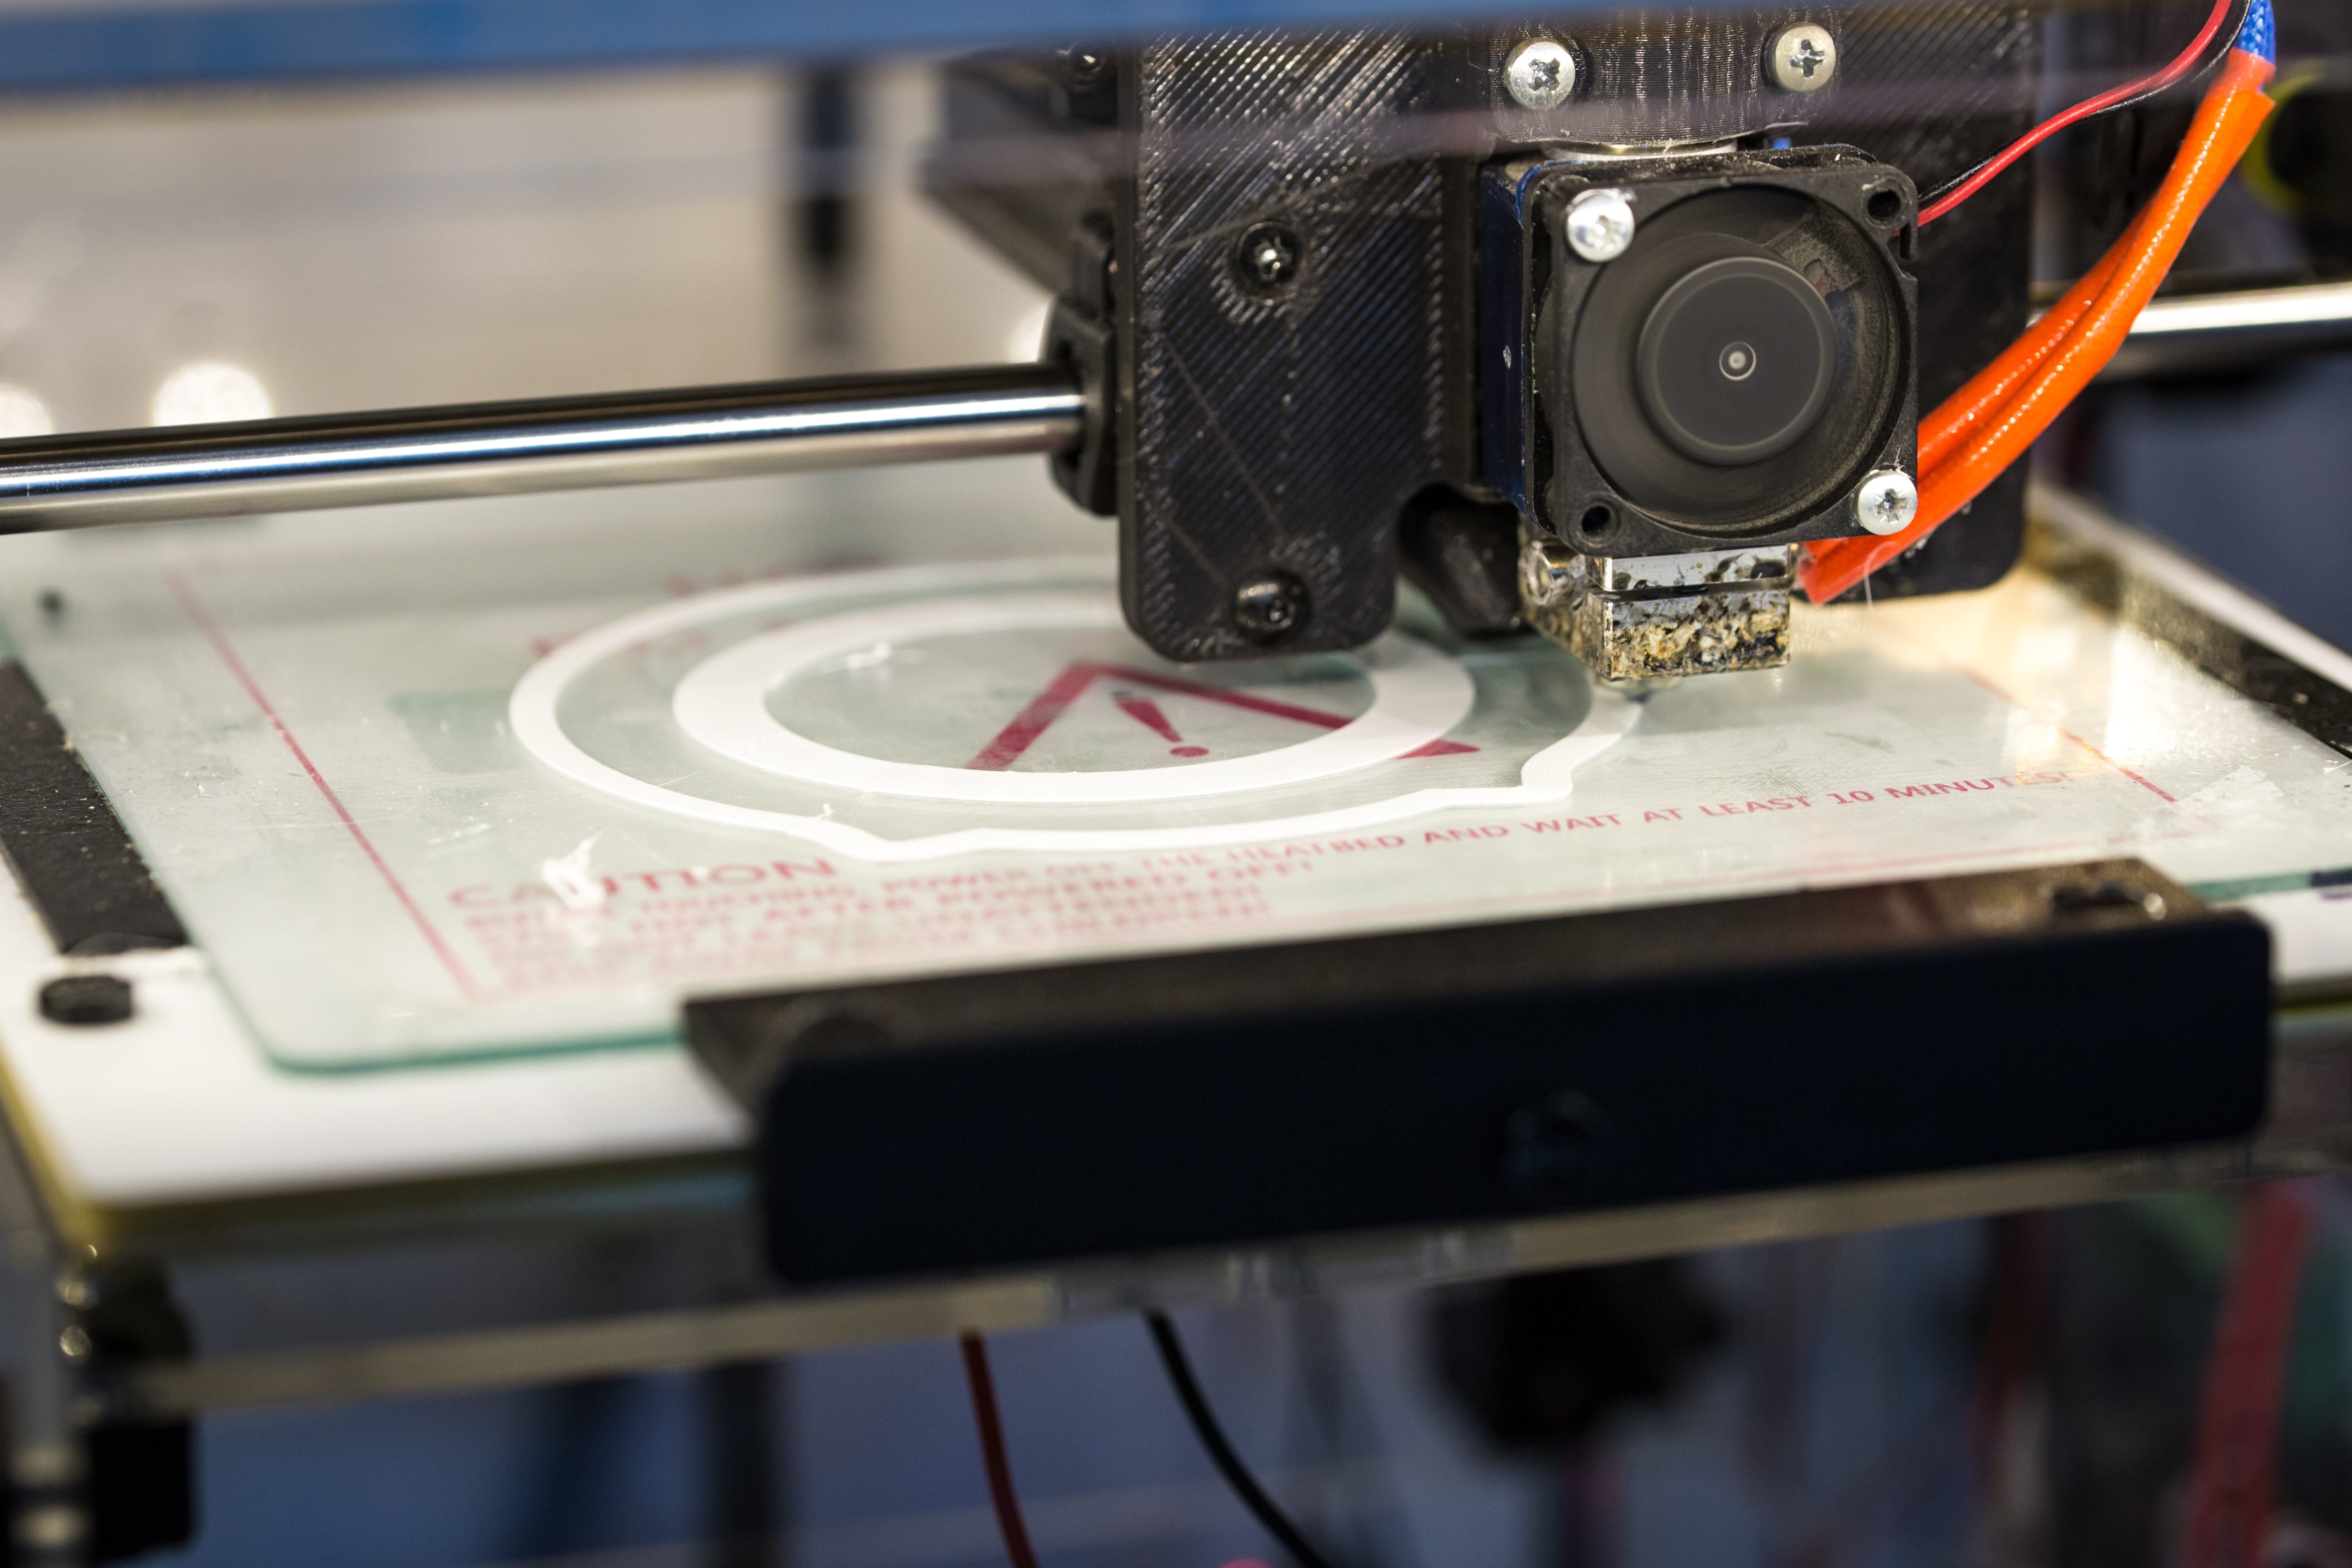 Calibrating 3D Printer - PID, Extruder Steps, and flowe rate - EnduranceLasers